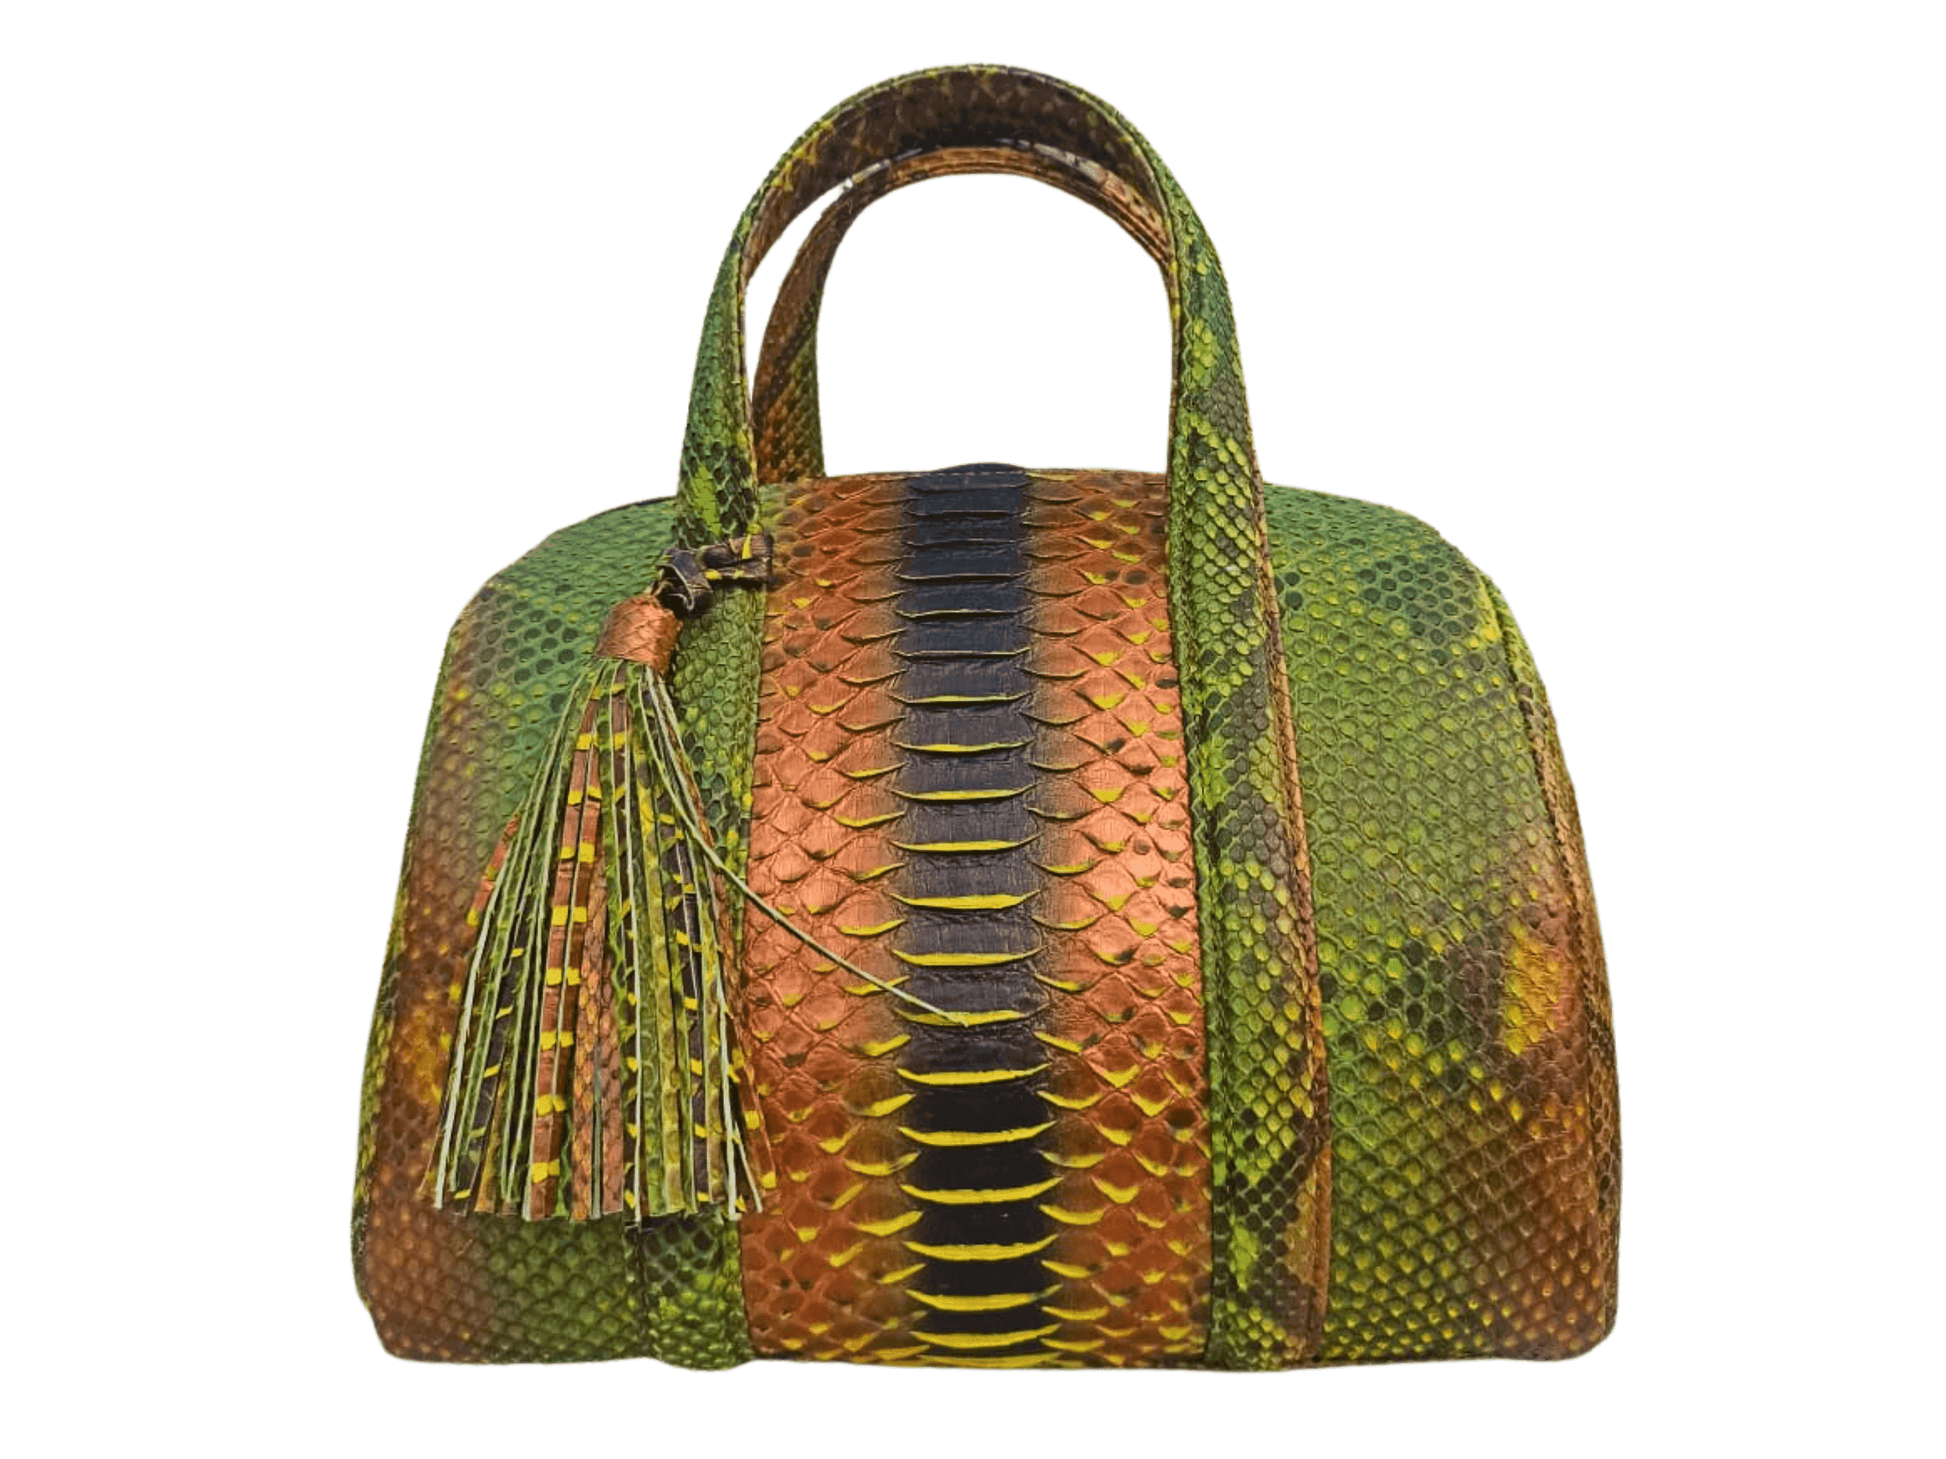 Snakeskin Bowler Bag Green Python Jacket by LFM Fashion